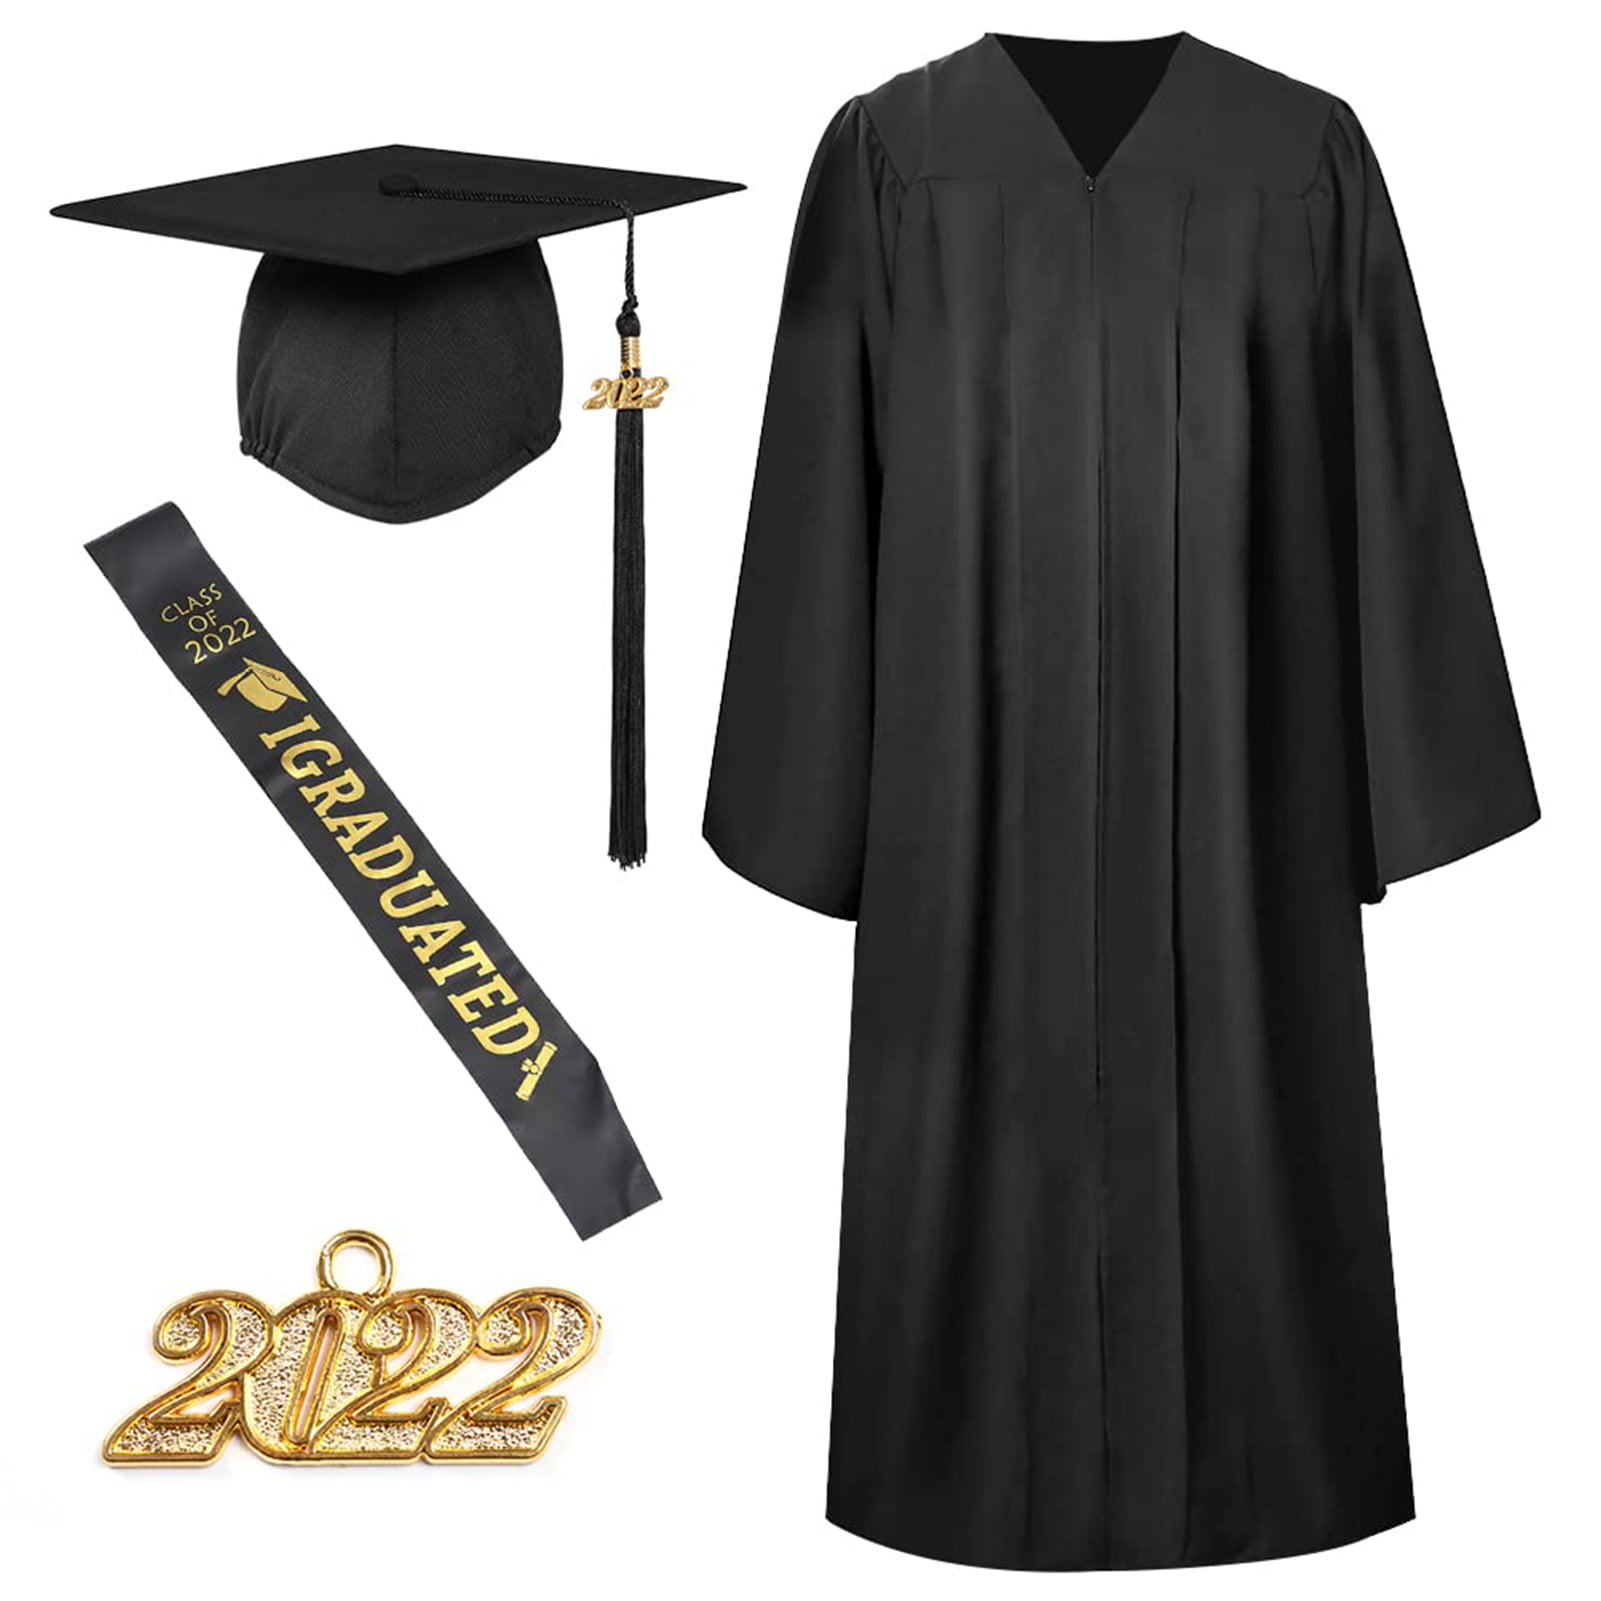 University Academic Bachelors Robe Top Quality Luxury! Black Graduation Gown 